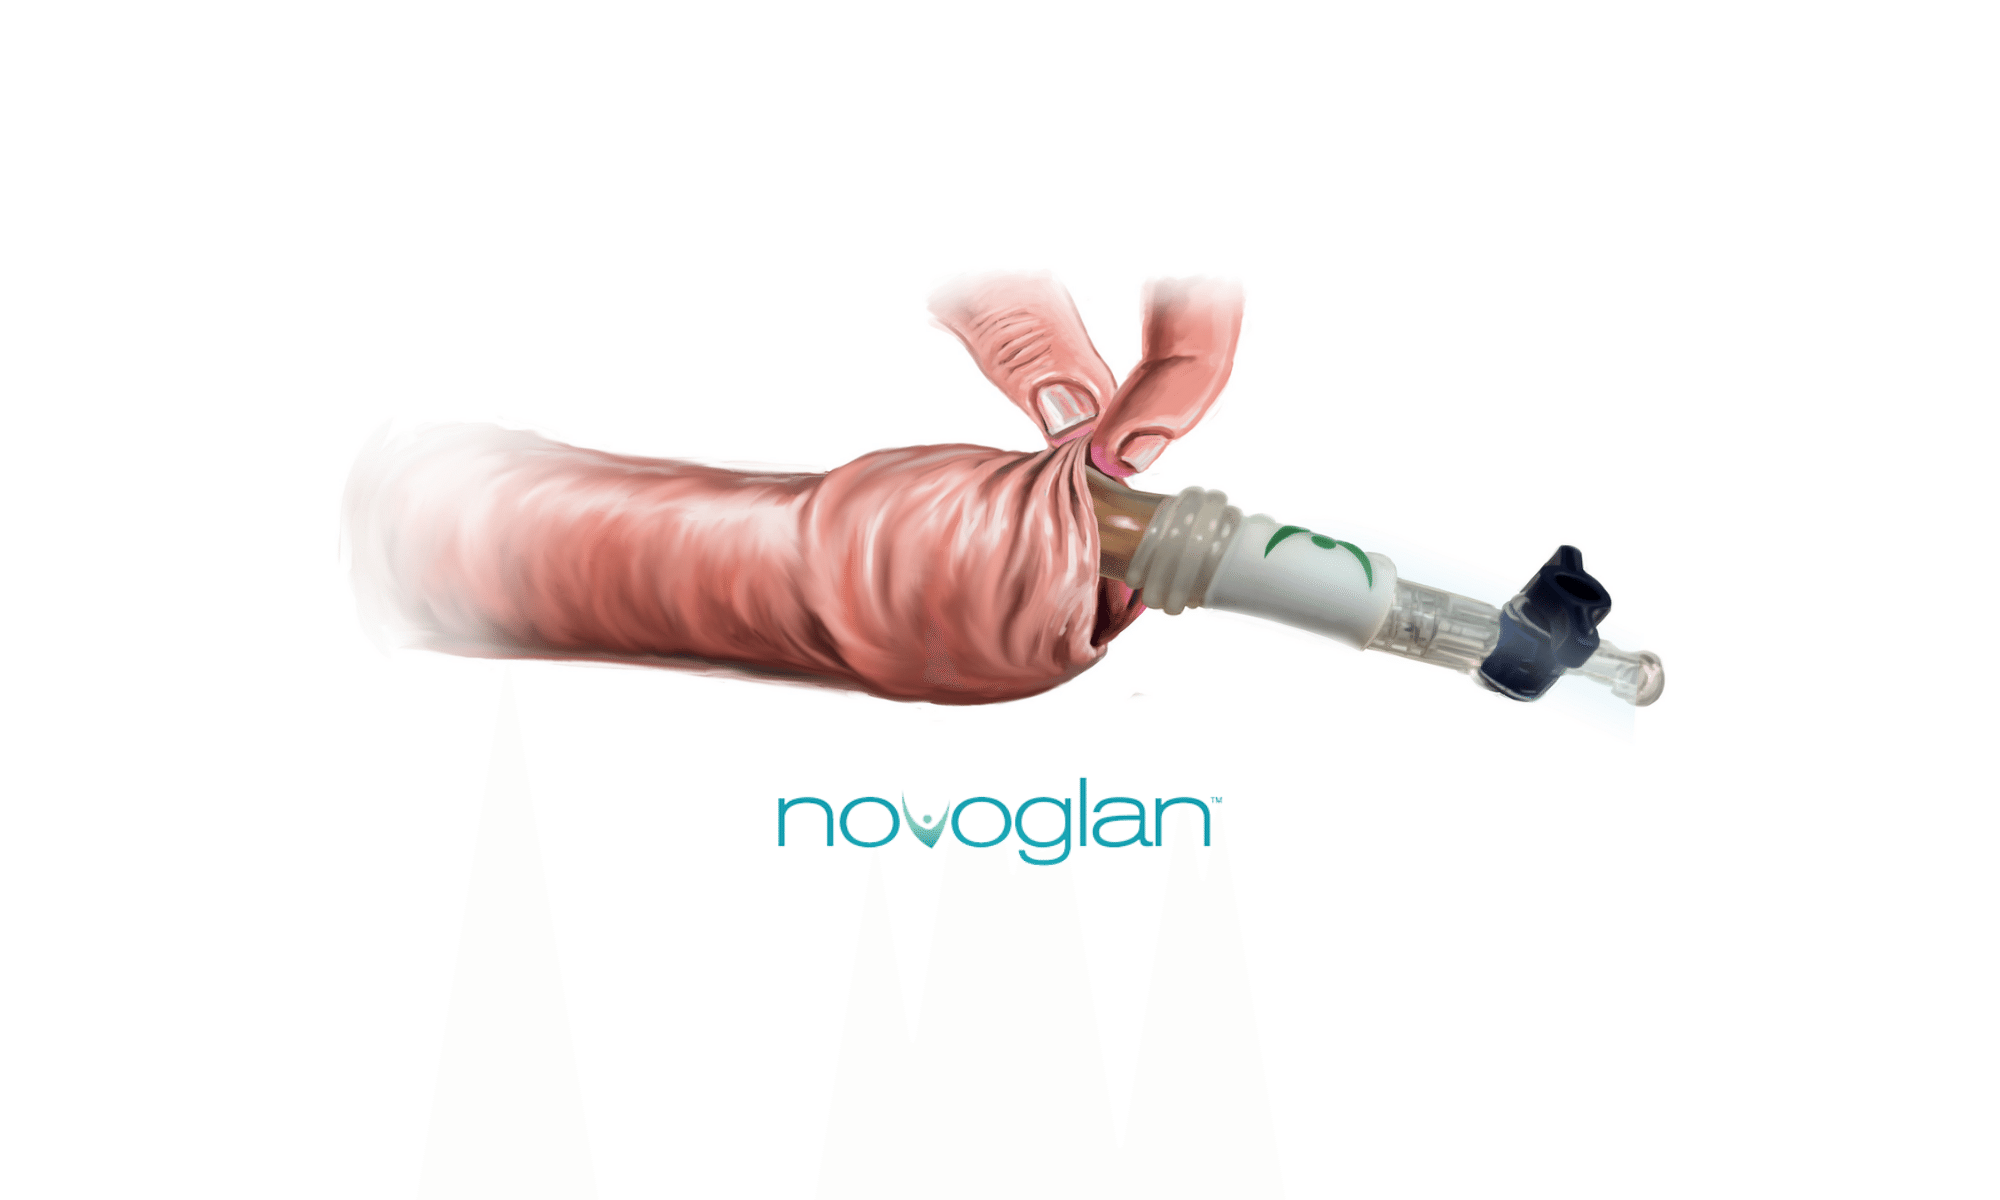 Novoglan - the gold standard in phimosis treatment! - Suffering